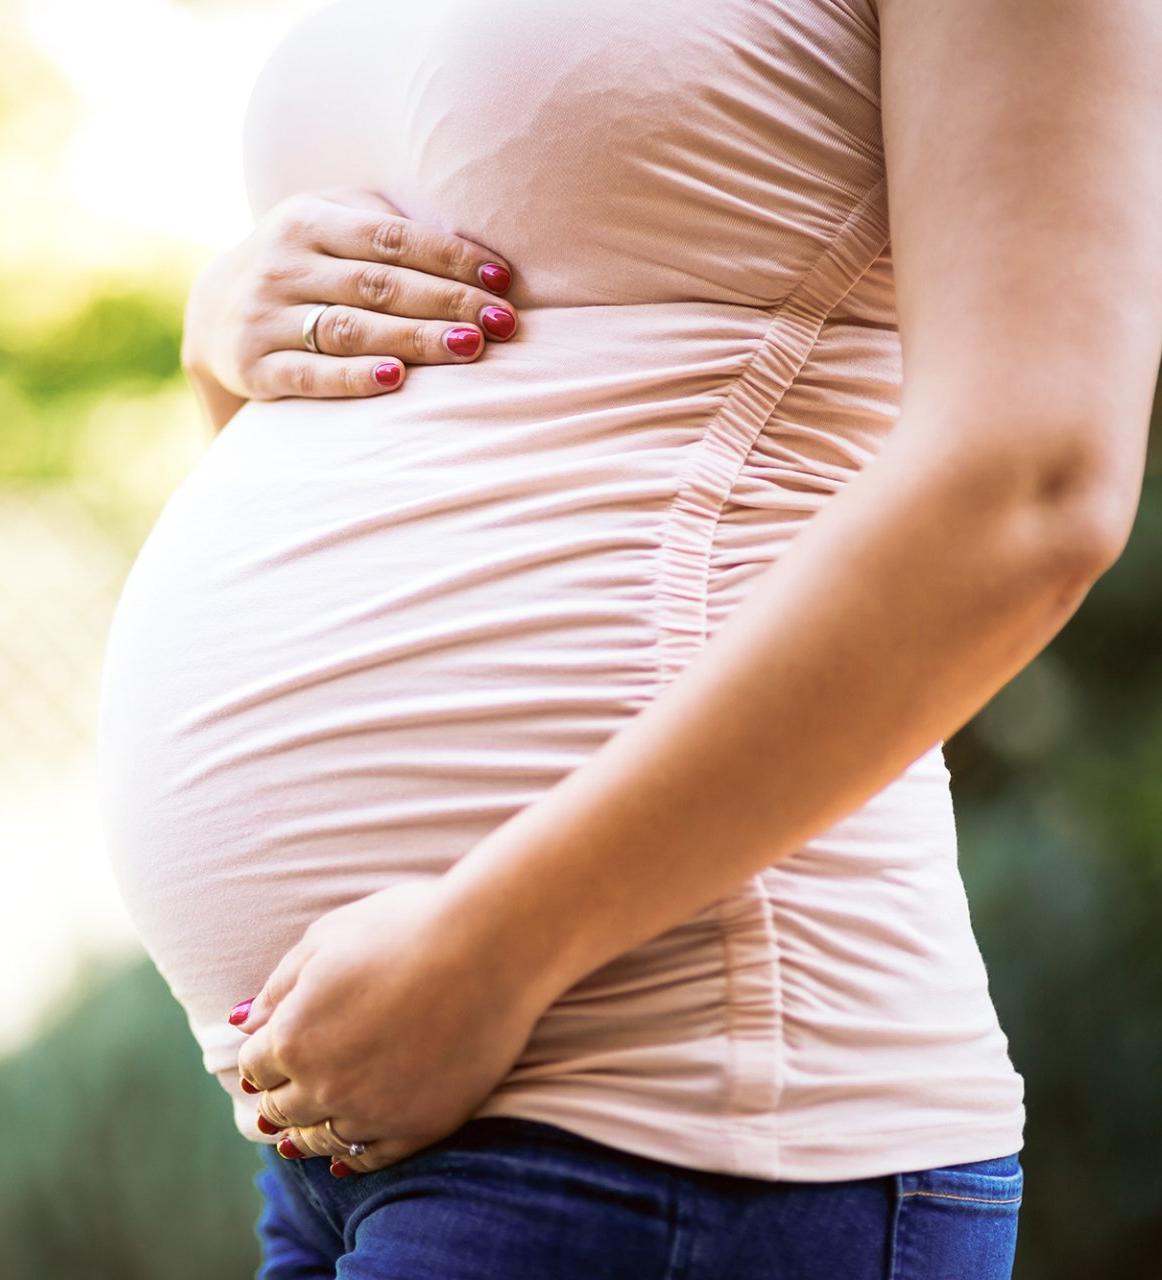 Planning for an Adoption or Surrogate in Mid-Missouri? Call Harper Evans Hilbrenner & Netemeyer